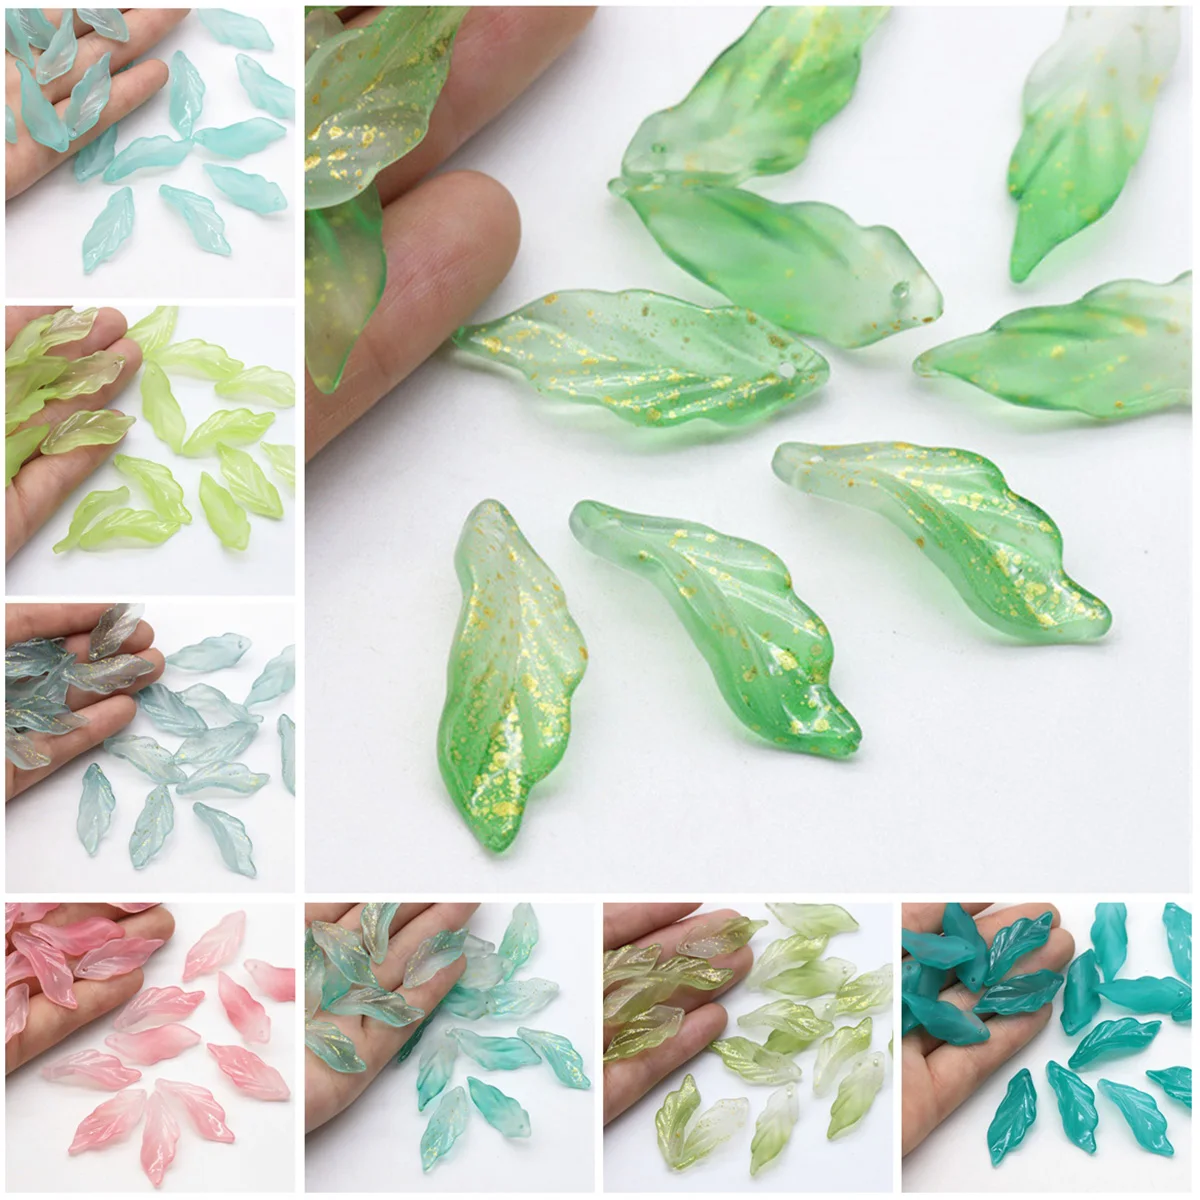 10pcs 18x11mm Leaf Shape Petal Handmade Lampwork Crystal Glass Loose Pendants Beads For Jewelry Findings DIY Flower Crafts Findings